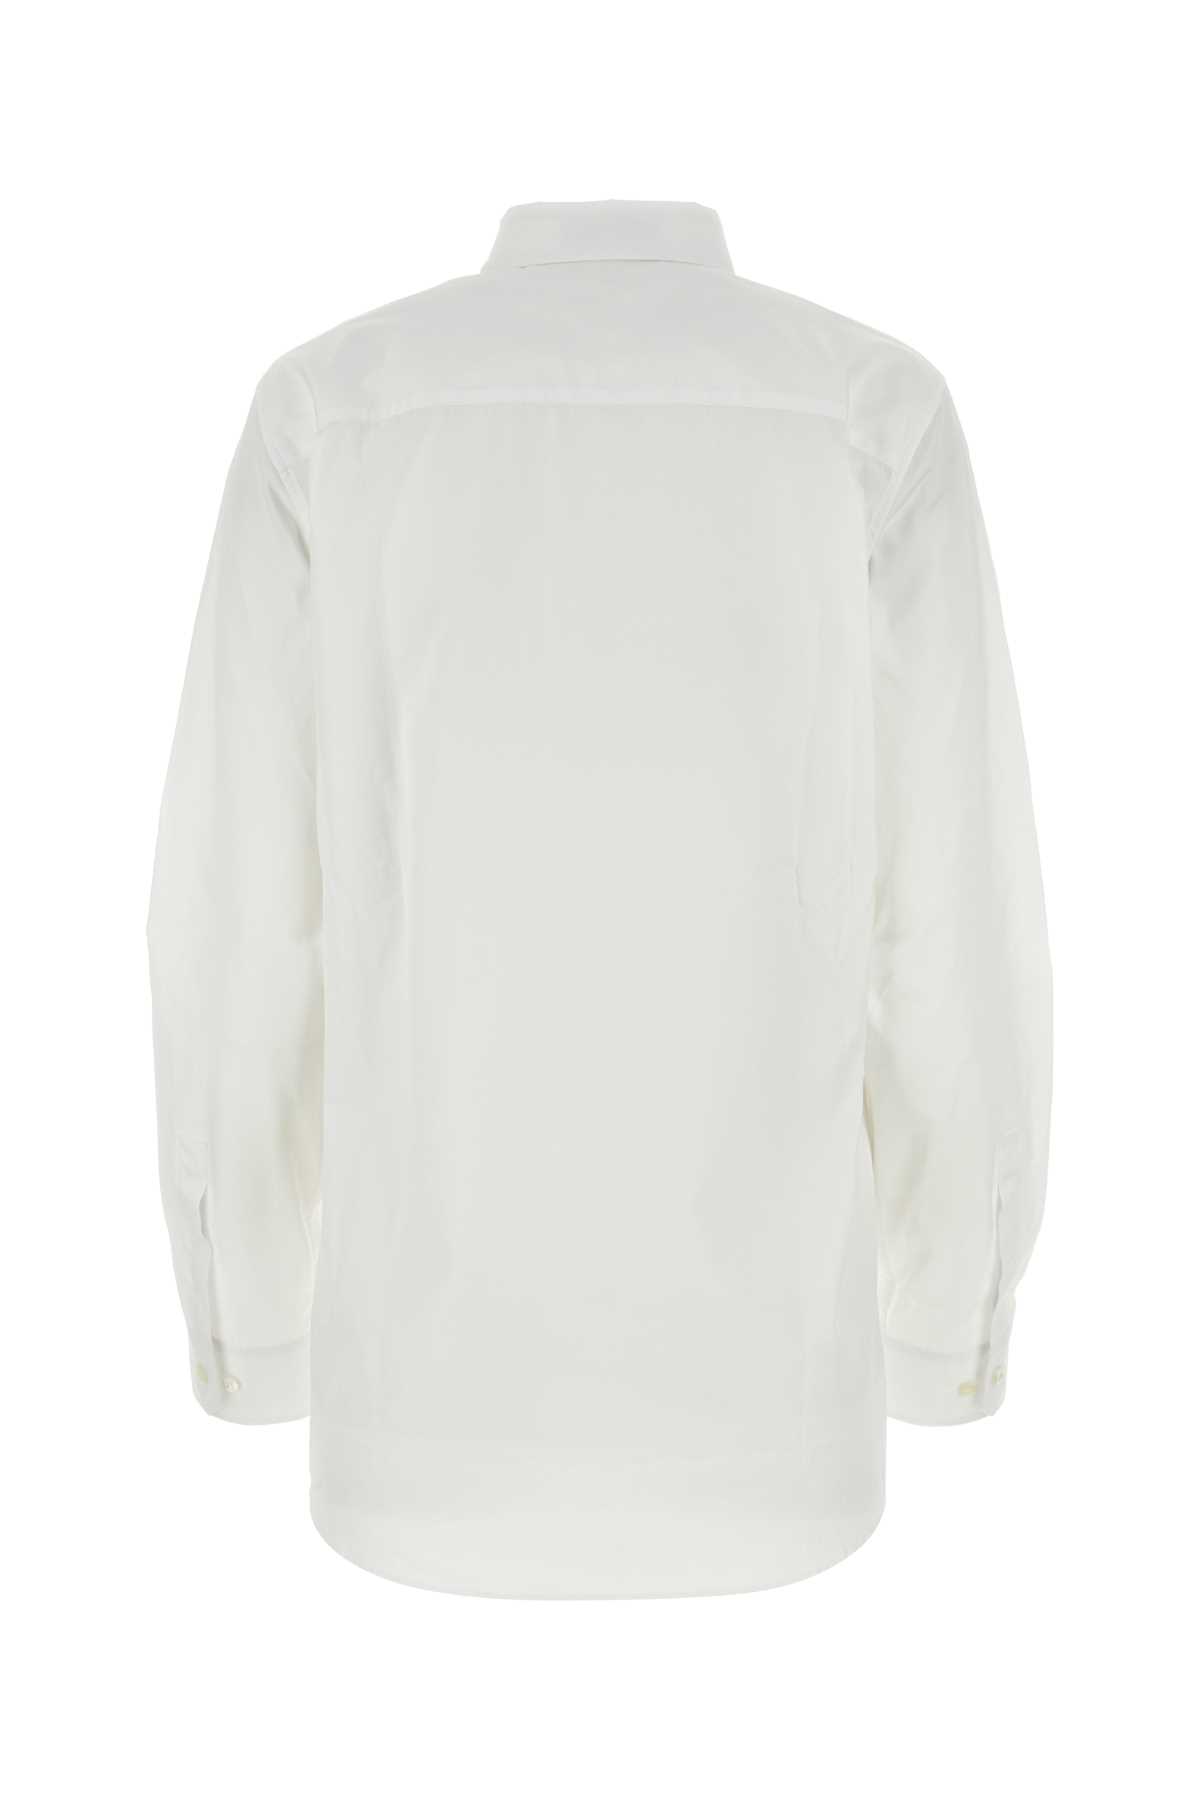 Miu Miu White Poplin Shirt In Bianco